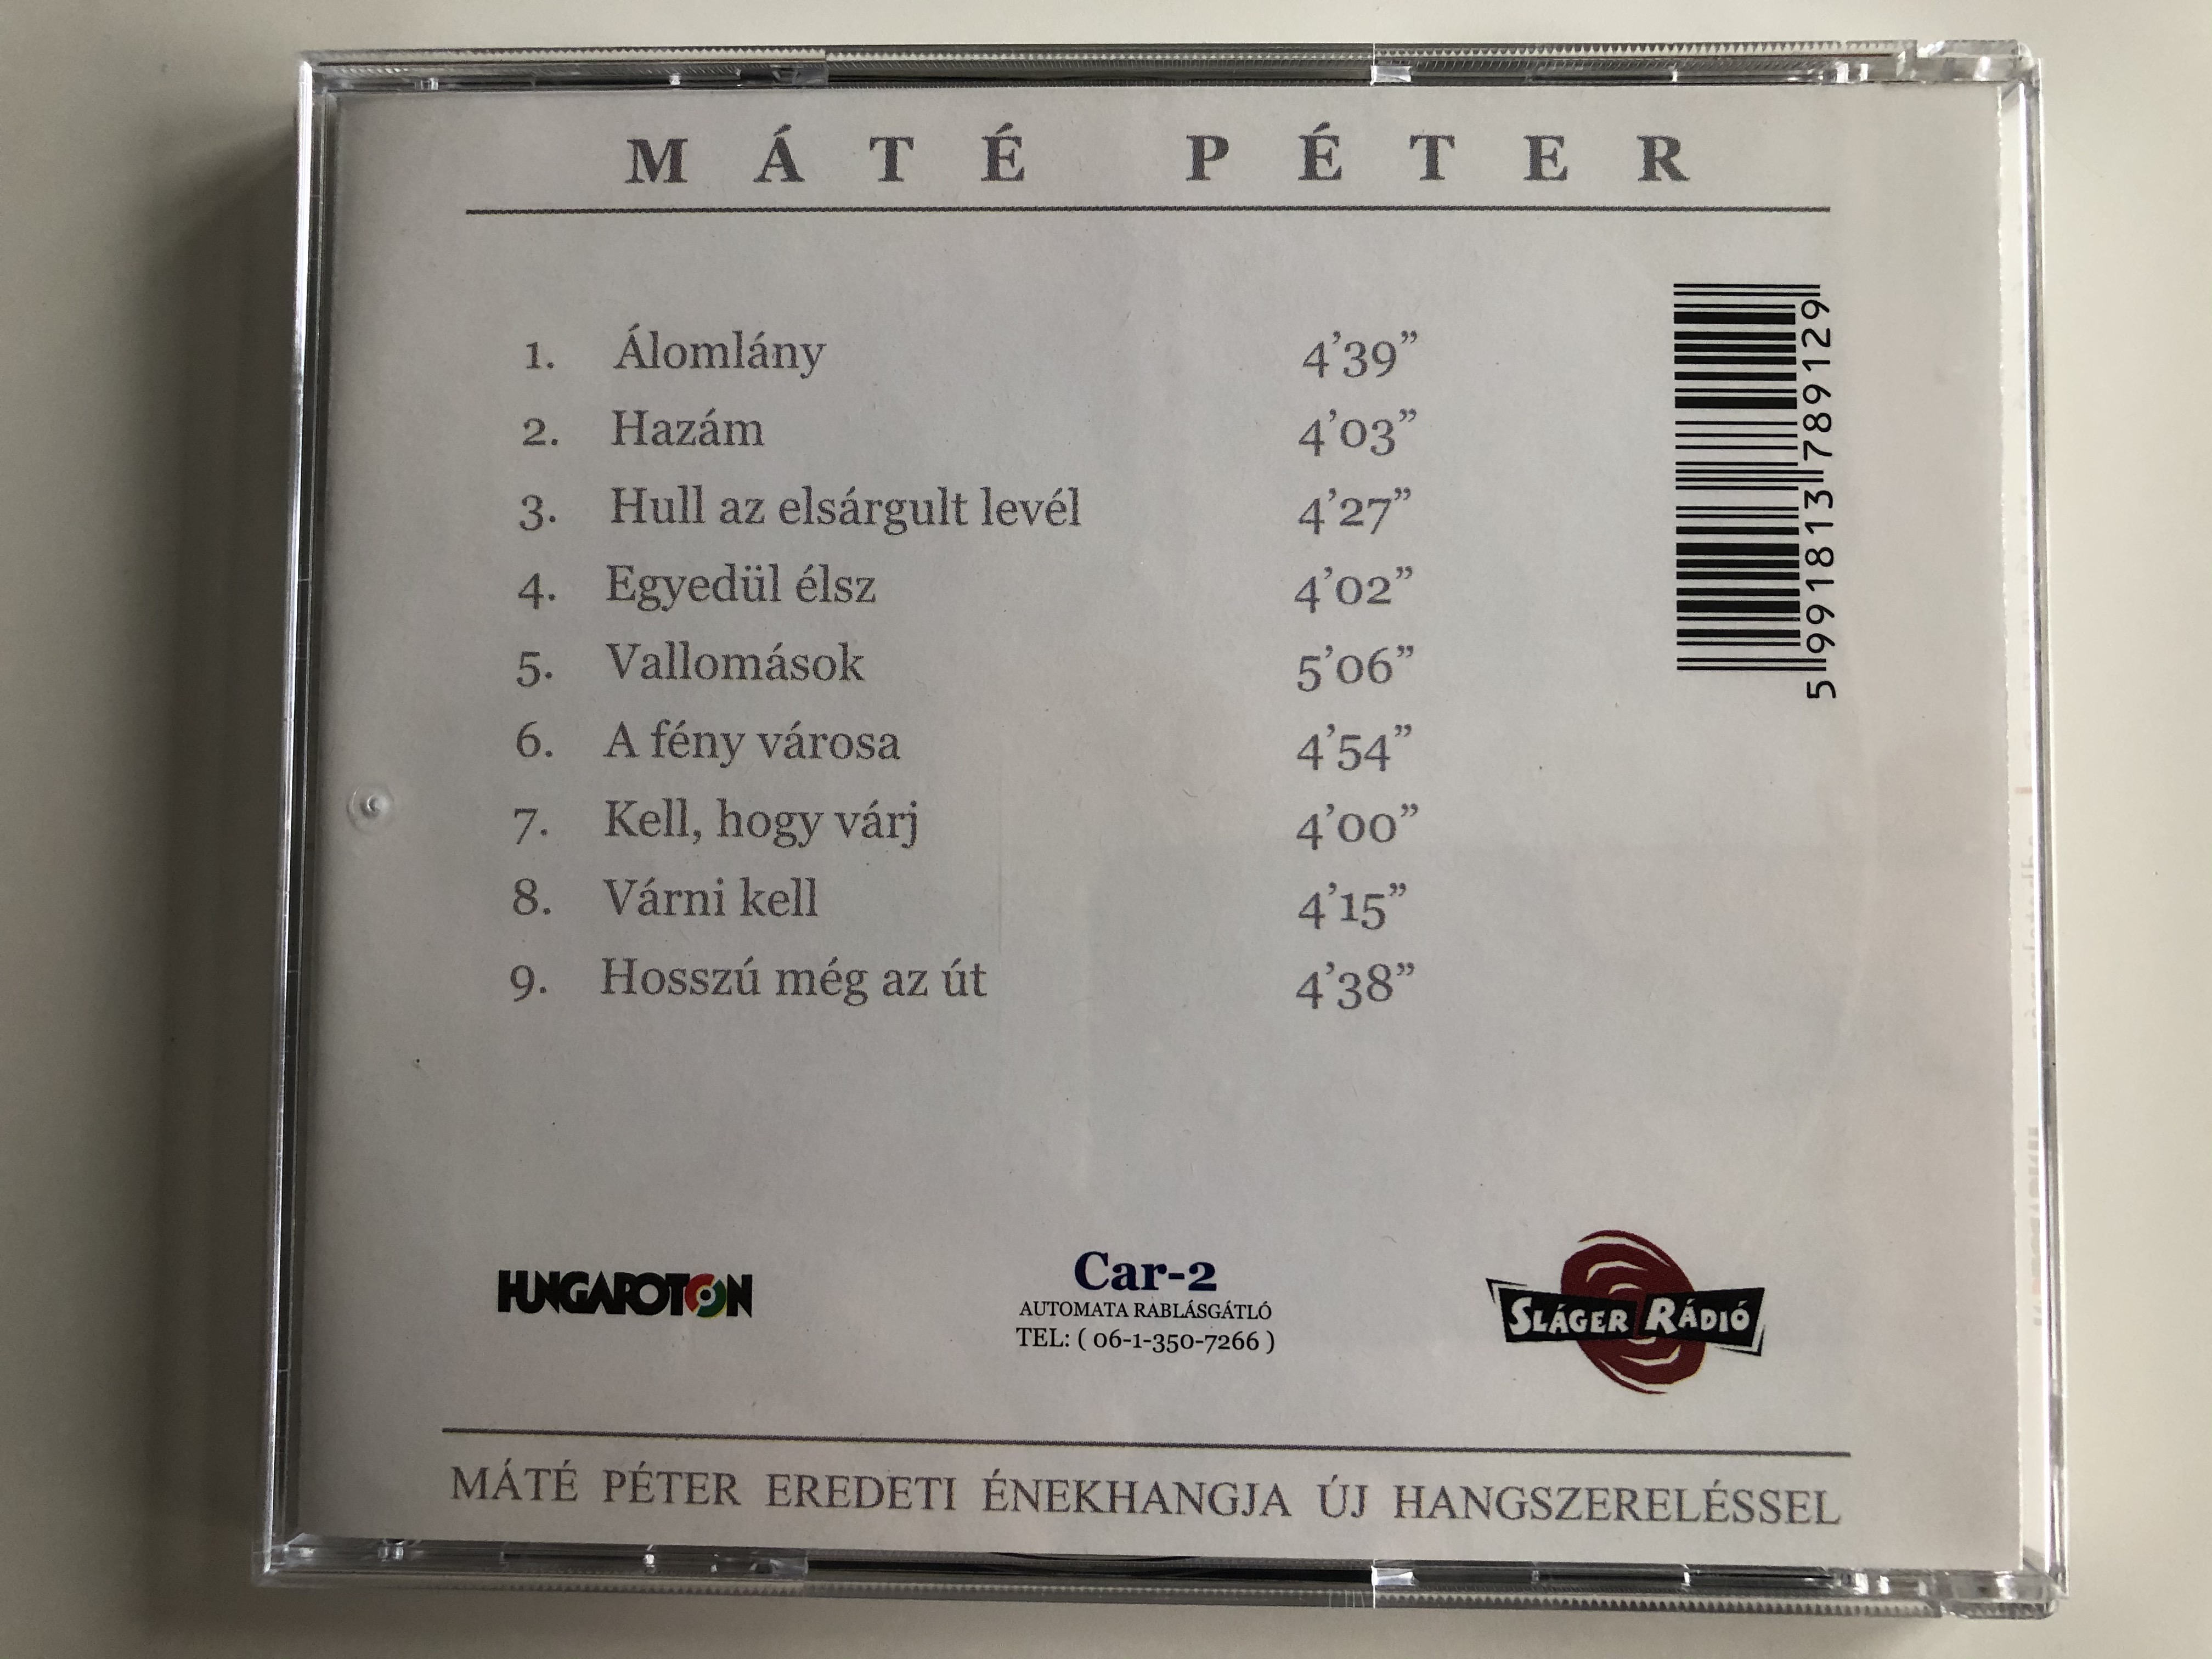 mate-peter-adhatok-meg...-mate-peter-eredeti-enekhangja-uj-hangszerelessel-hungaroton-audio-cd-2000-hcd-37891-9-.jpg